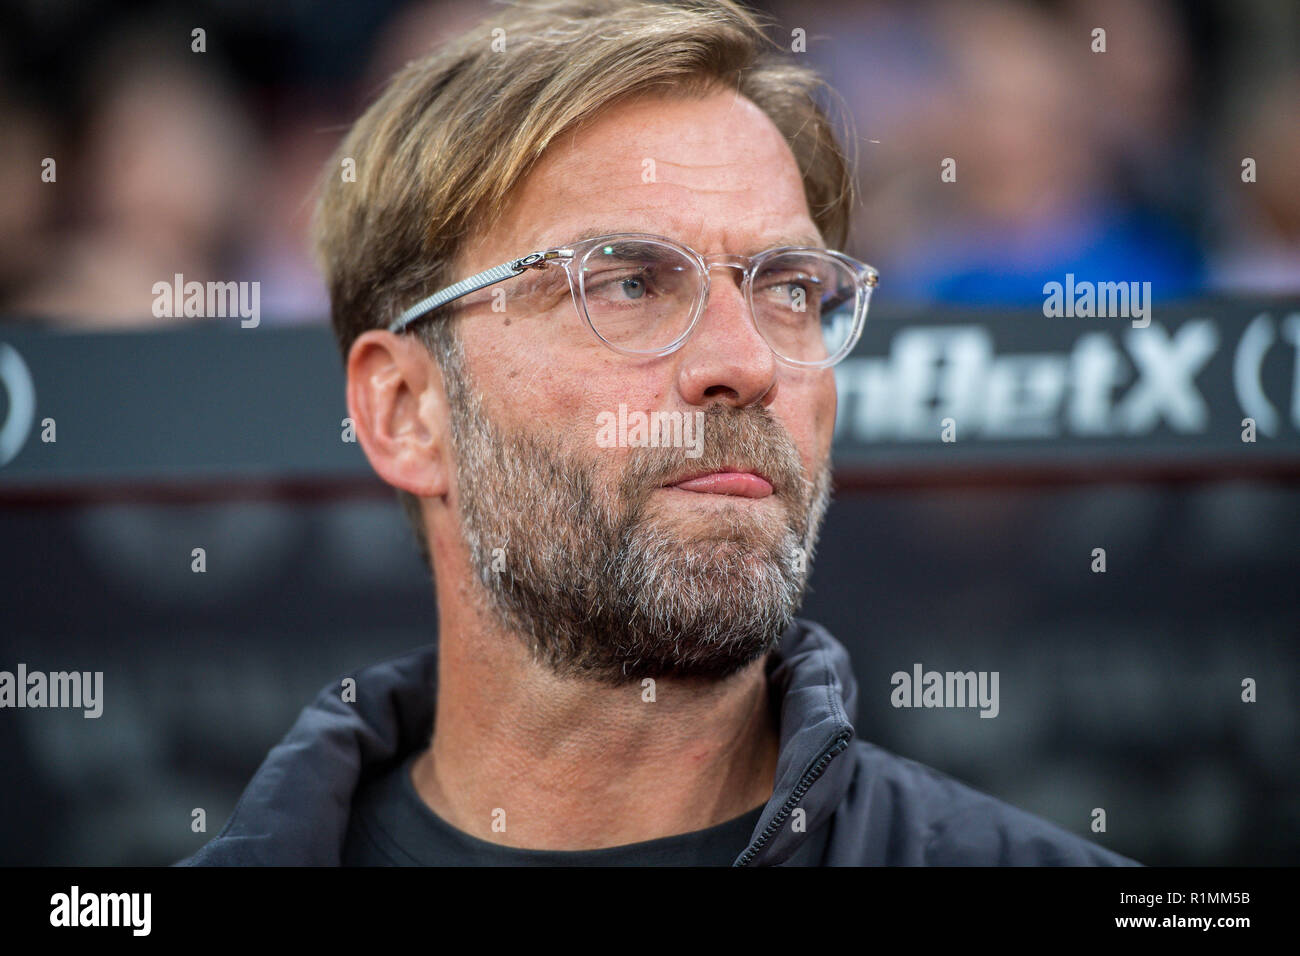 LONDON, ENGLAND - AUGUST 20: Jurgen Klopp manager of Liverpool F.C. during  the Premier League match between